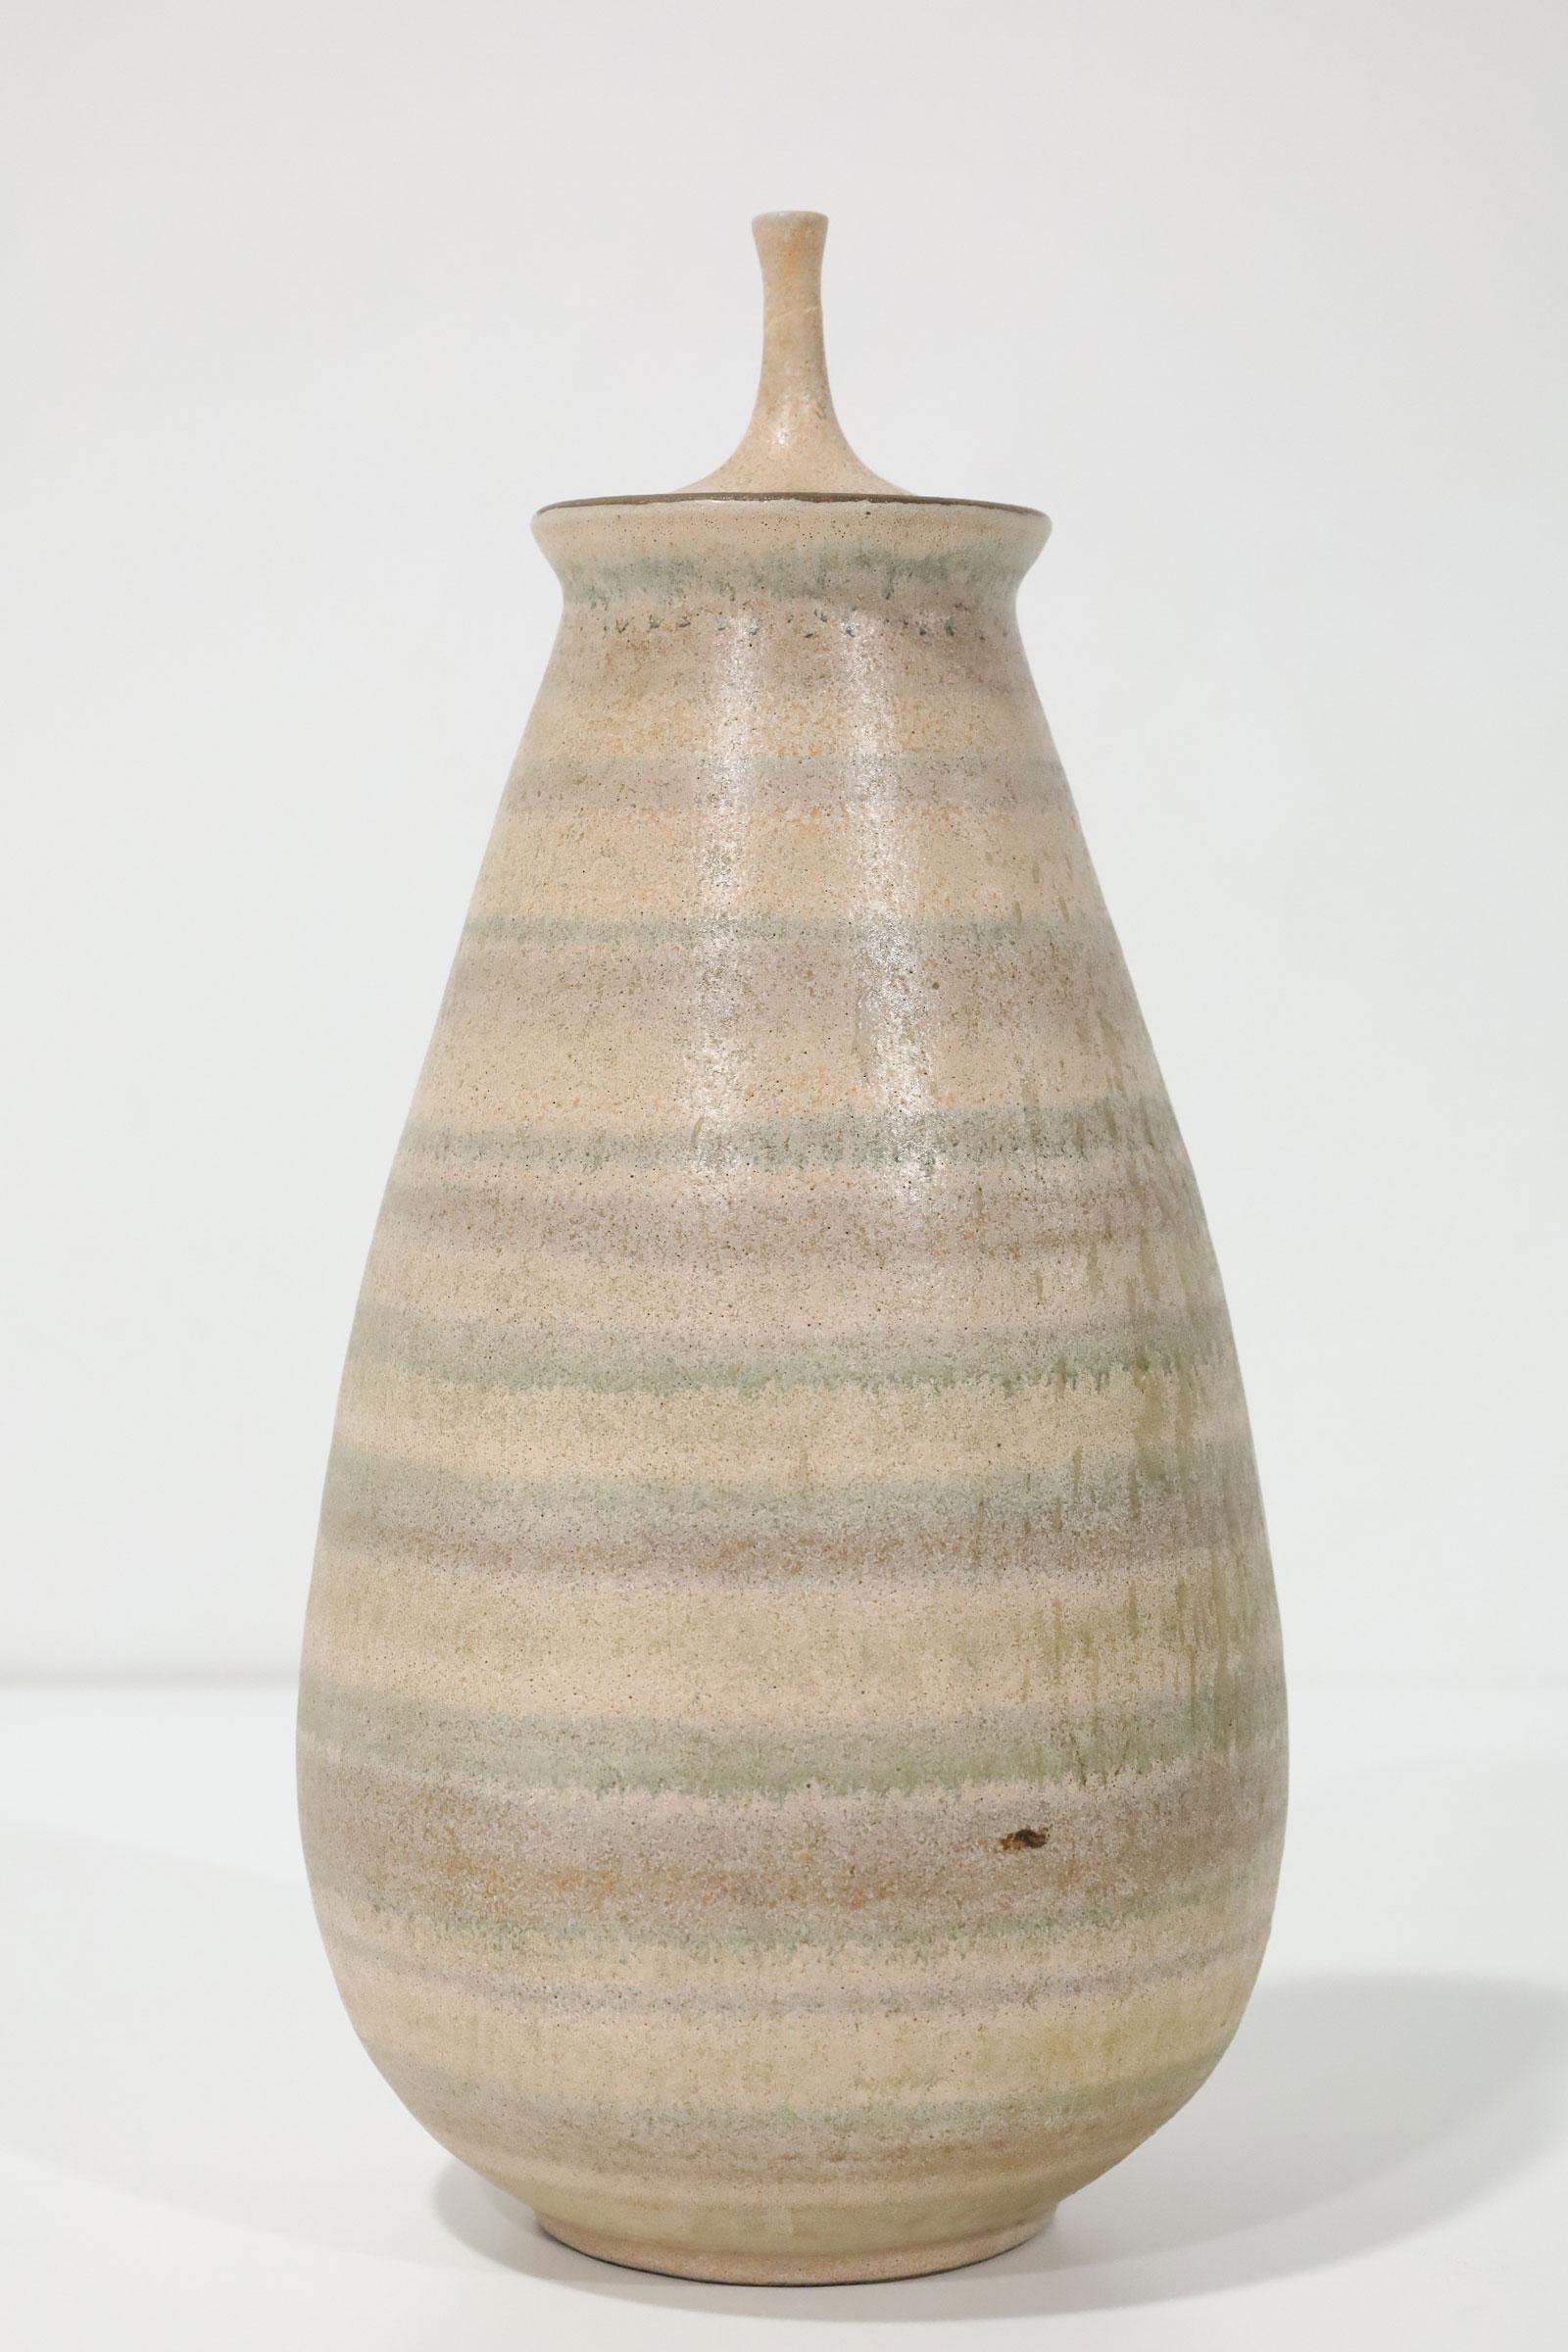 Clyde Burt Ceramic Vase with Lid For Sale 2